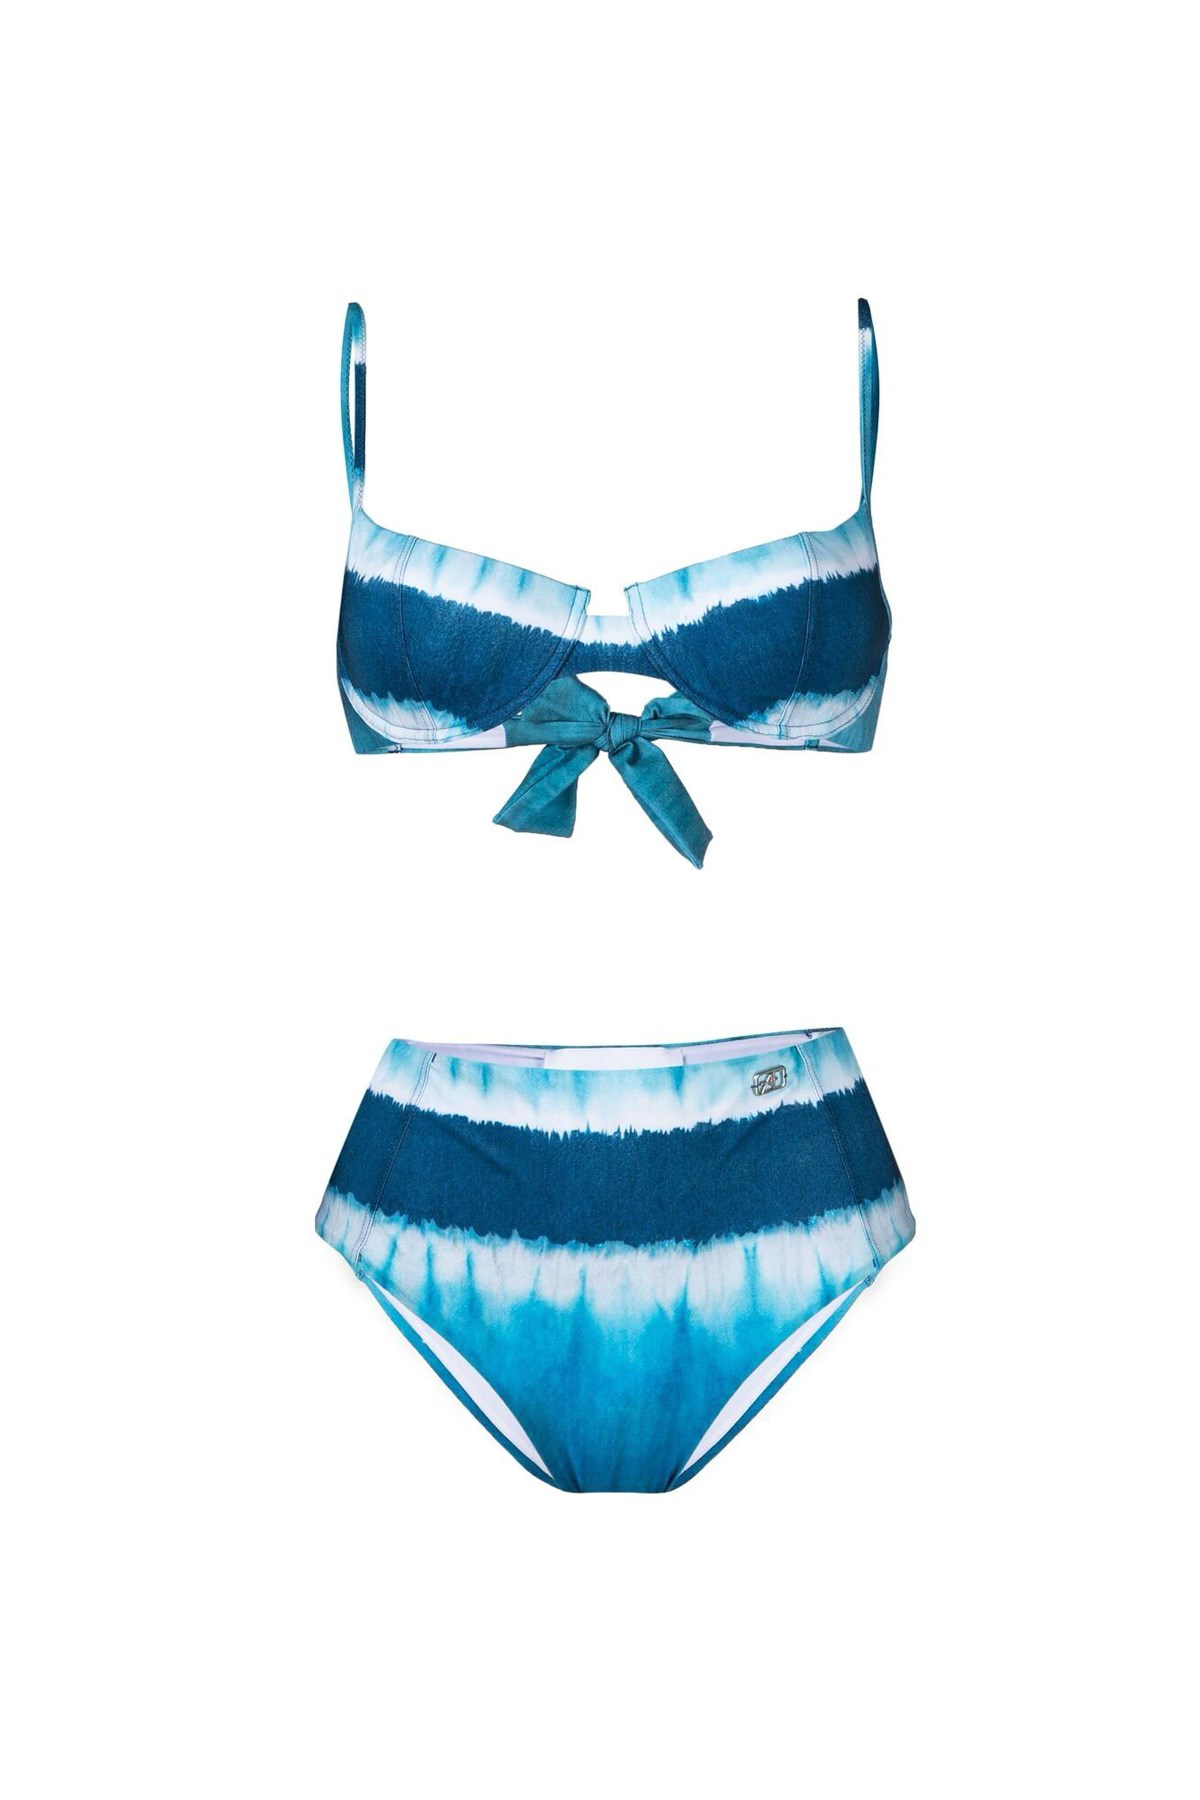 ALBERTA FERRETTI Caspule I Love Summer Tie-Dye Bikini